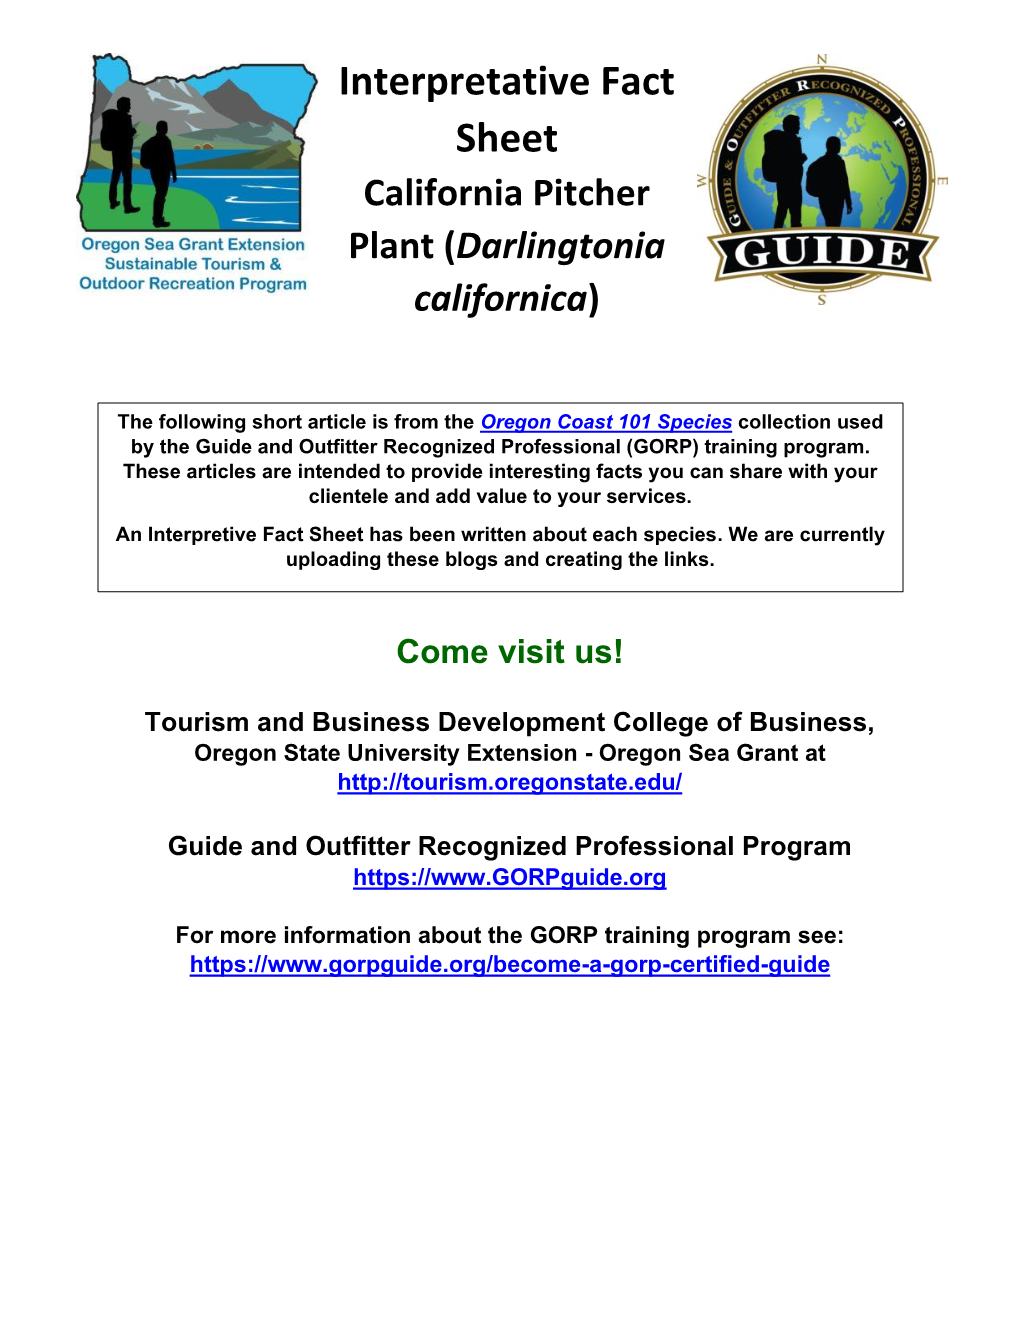 California Pitcher Plants (Darlingtonia Californica)